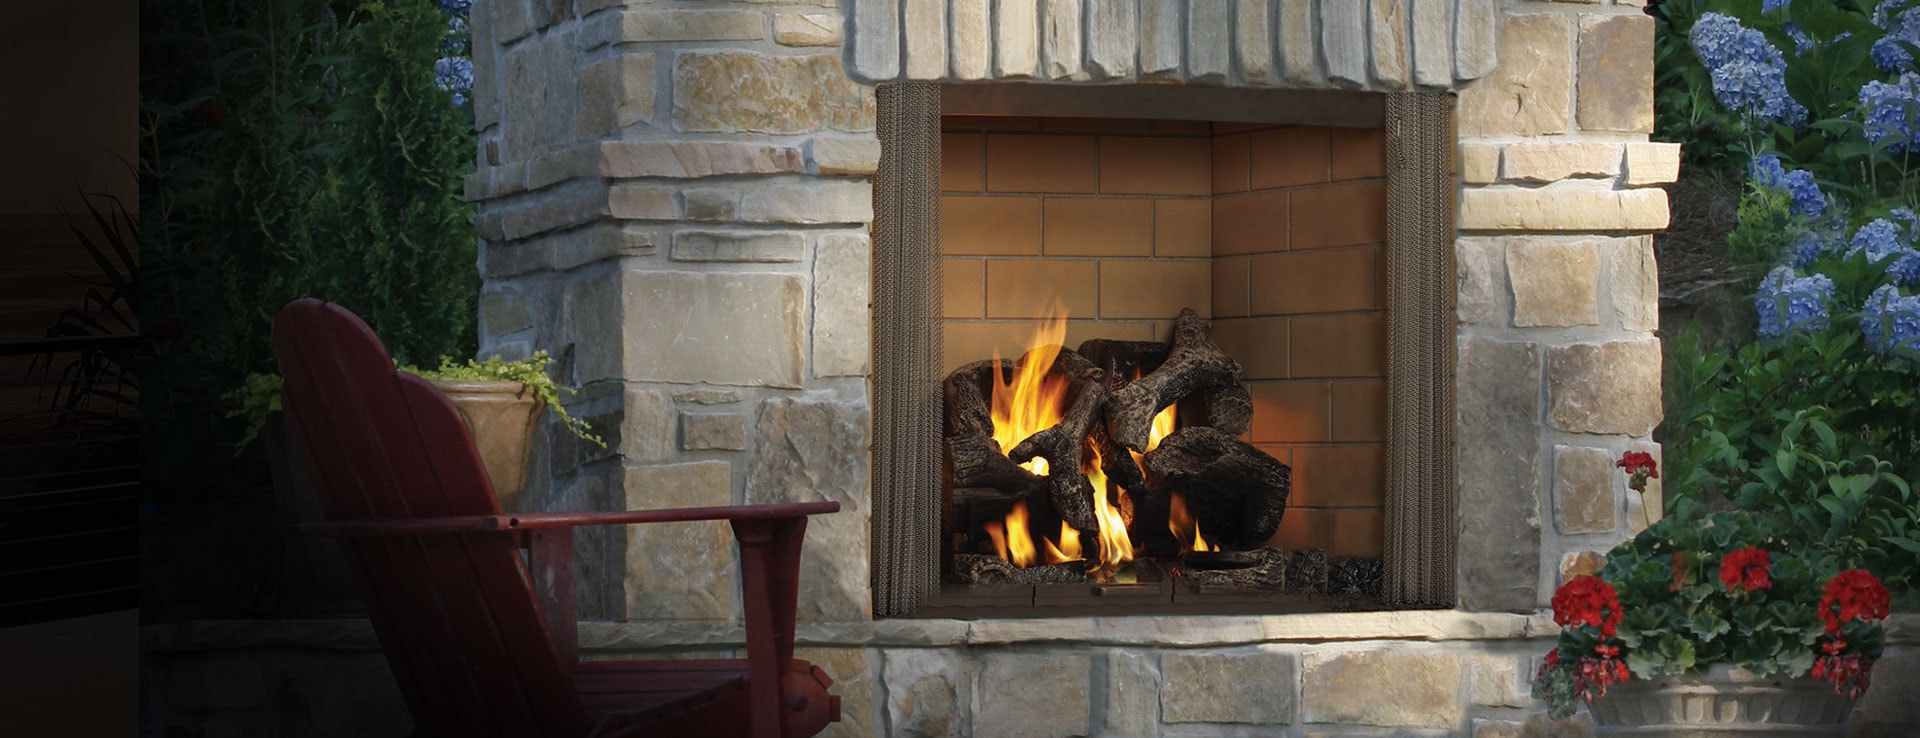 Heatilator Gas Fireplace Inspirational Castlewood Outdoor Wood Fireplace